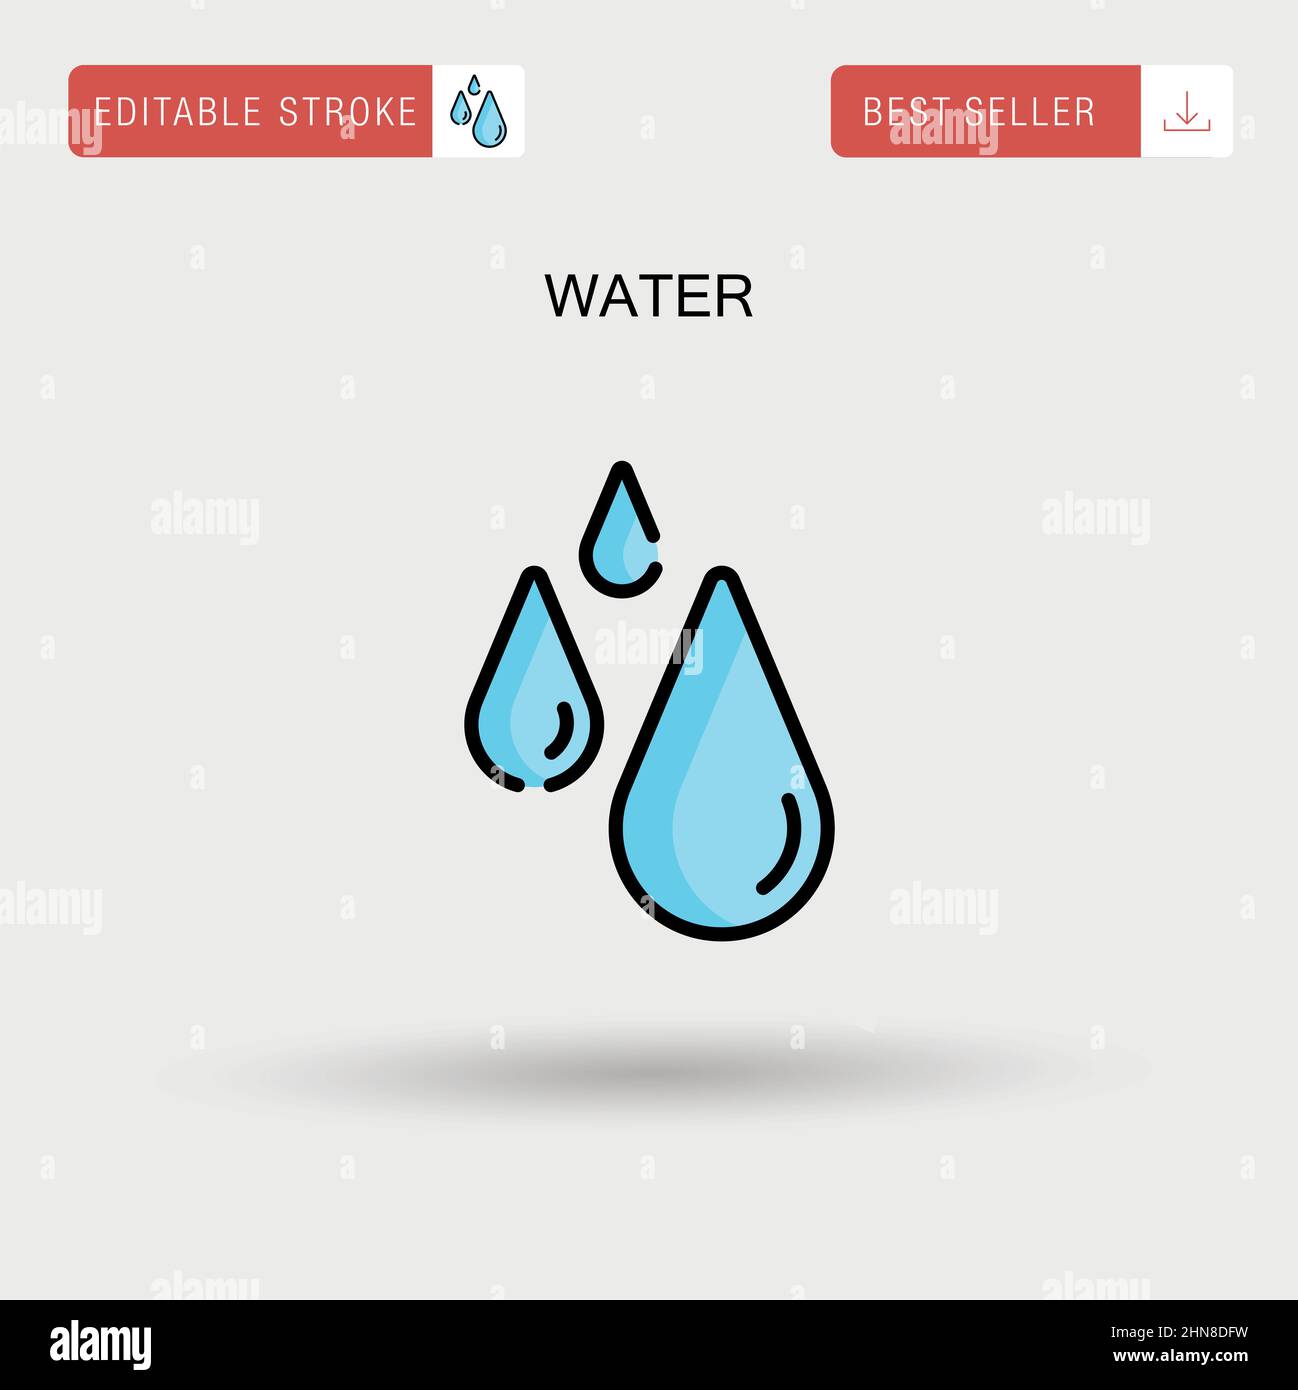 Water Simple vector icon. Stock Vector